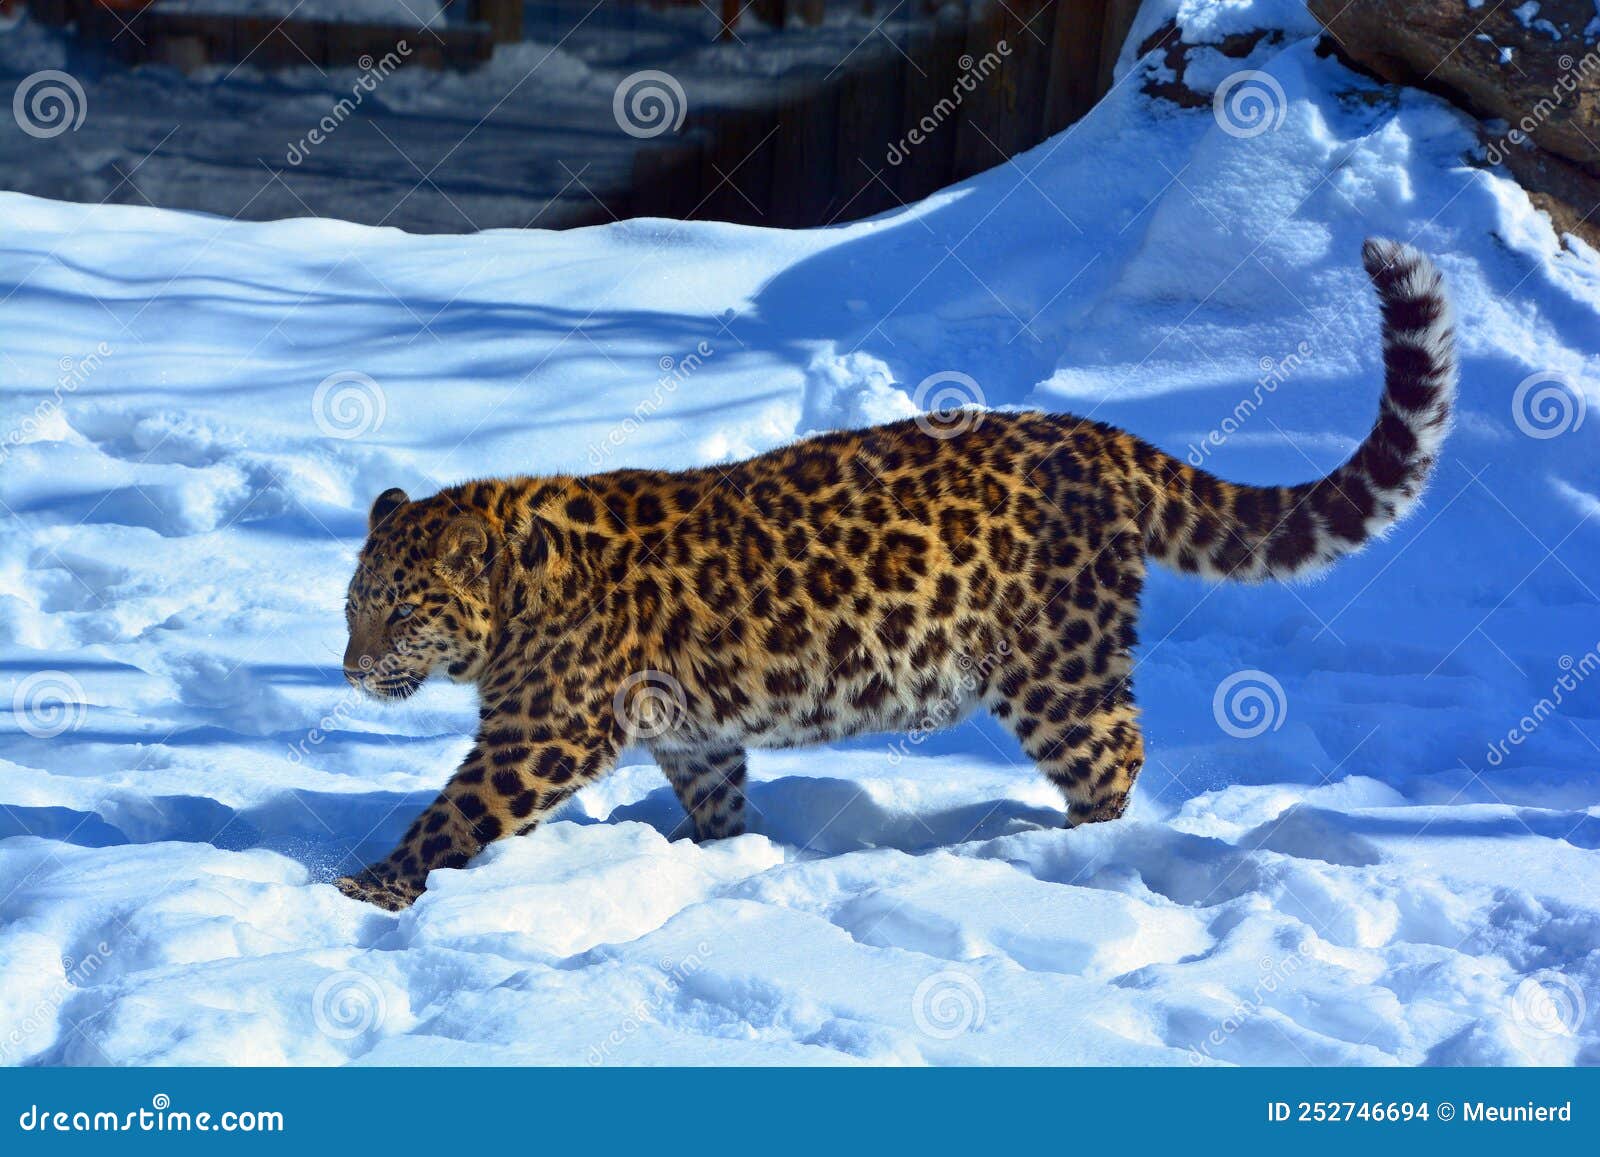 amur leopard is a leopard subspecies